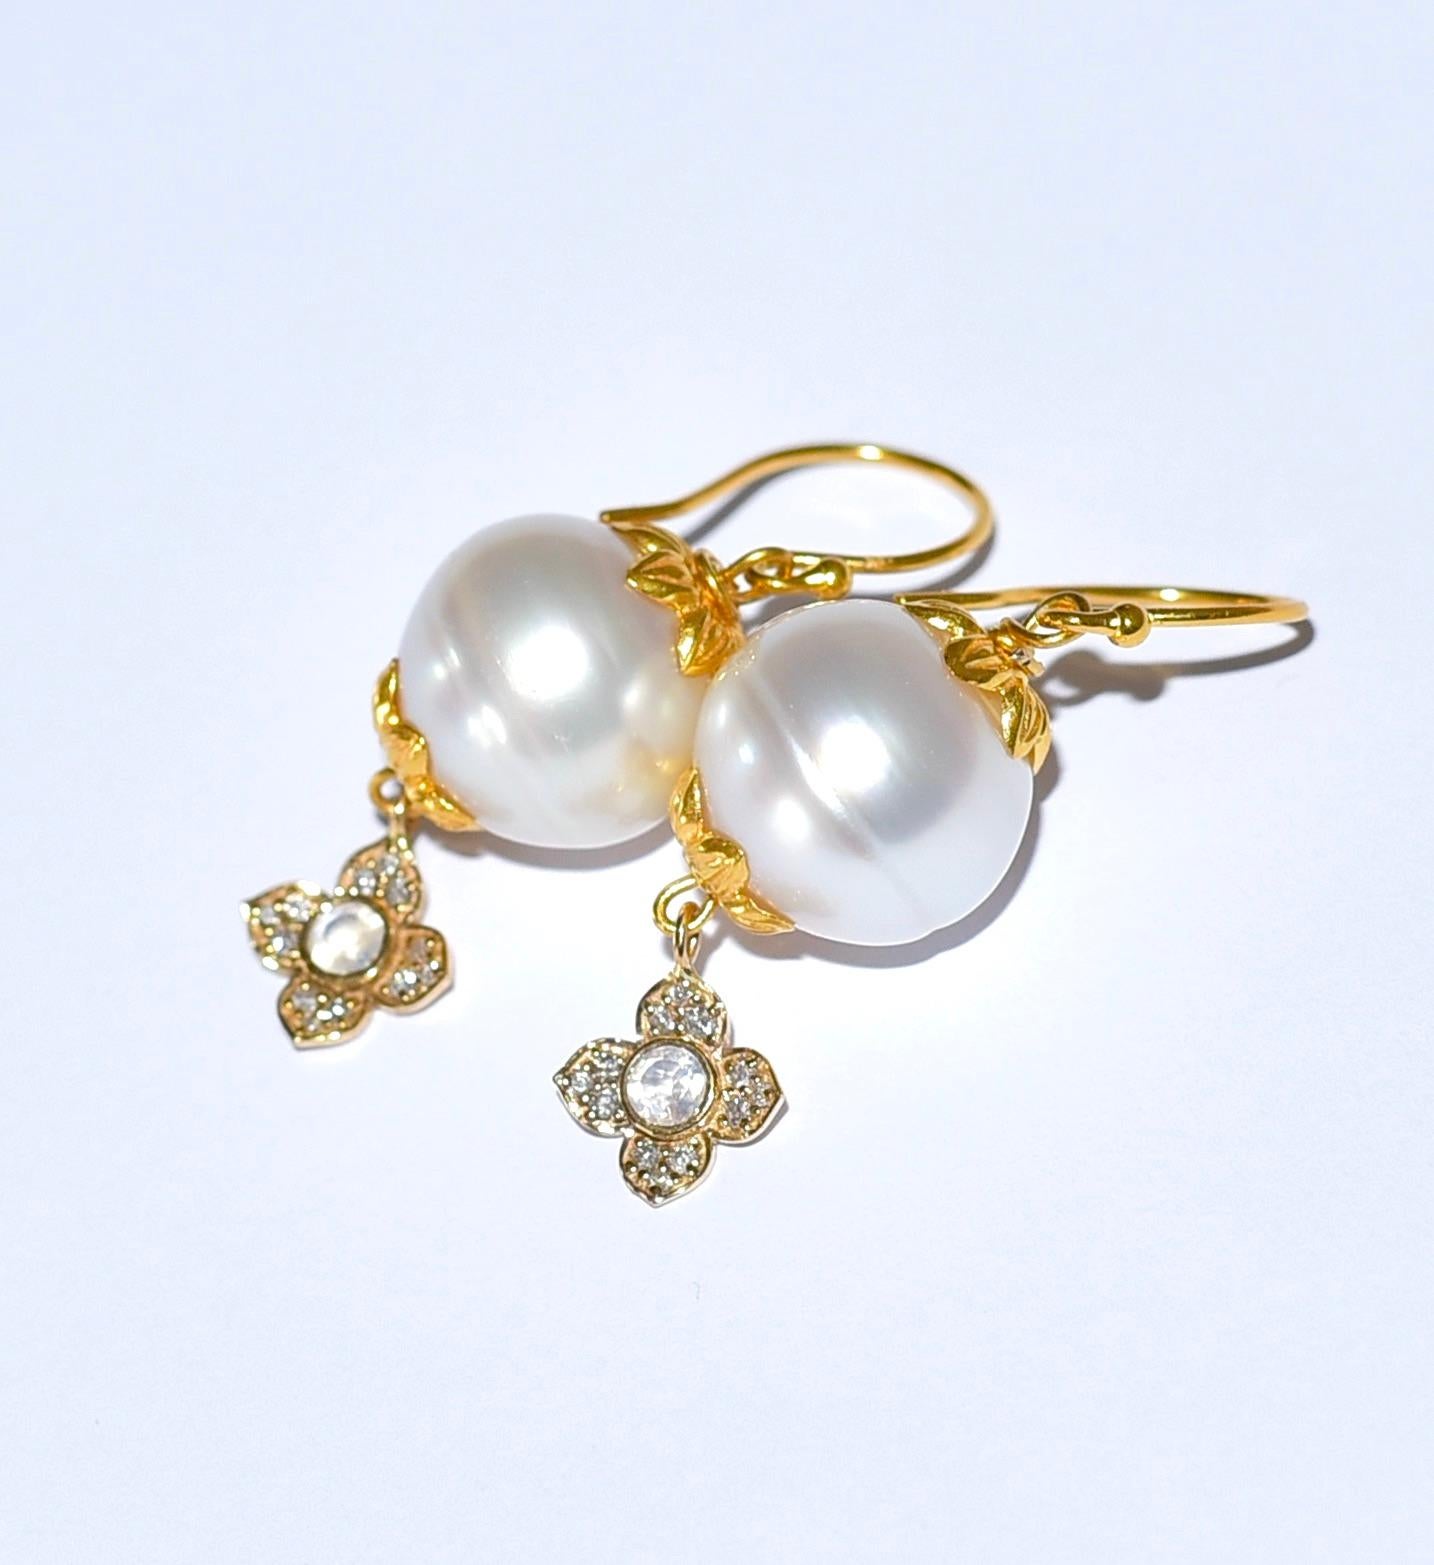 Bead South Sea Pearl, Diamond, Moonstone Earrings in 18K Solid Yellow Gold